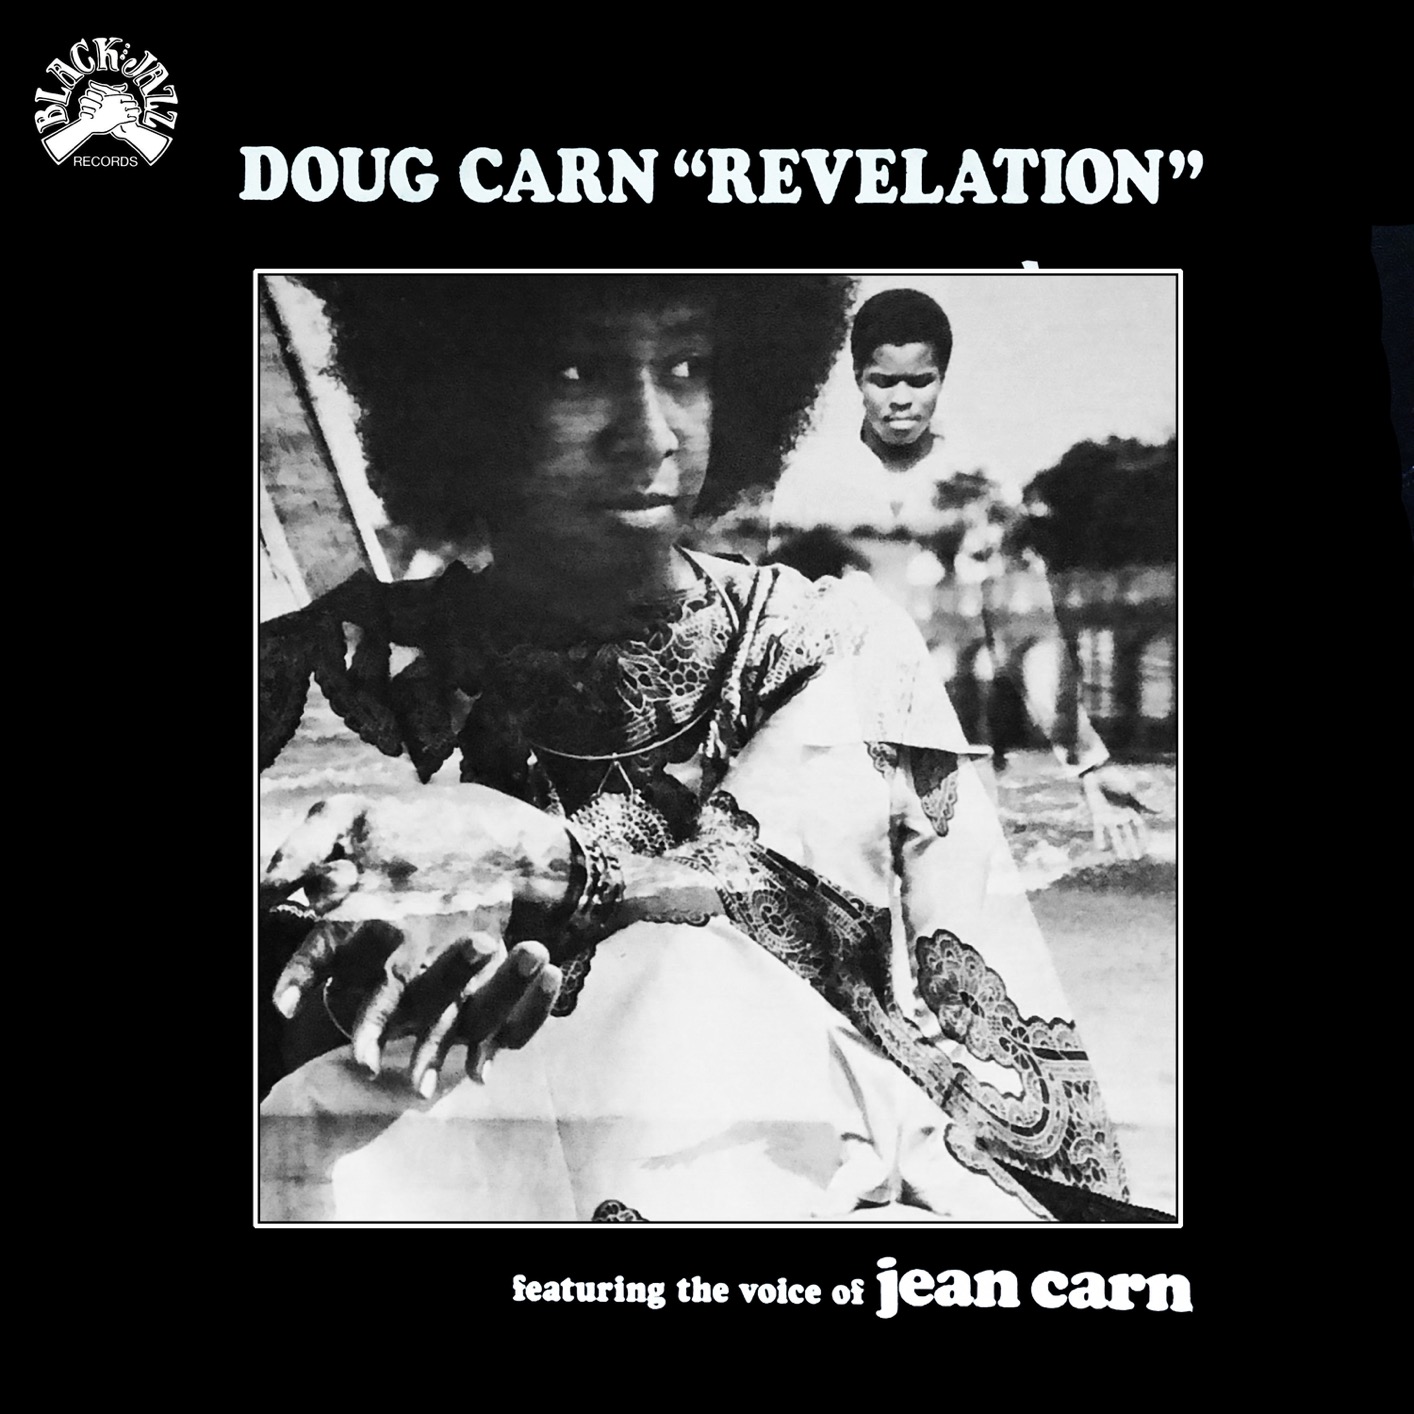 Doug Carn – Revelation (Remastered) (1973/2020) [FLAC 24bit/96kHz]